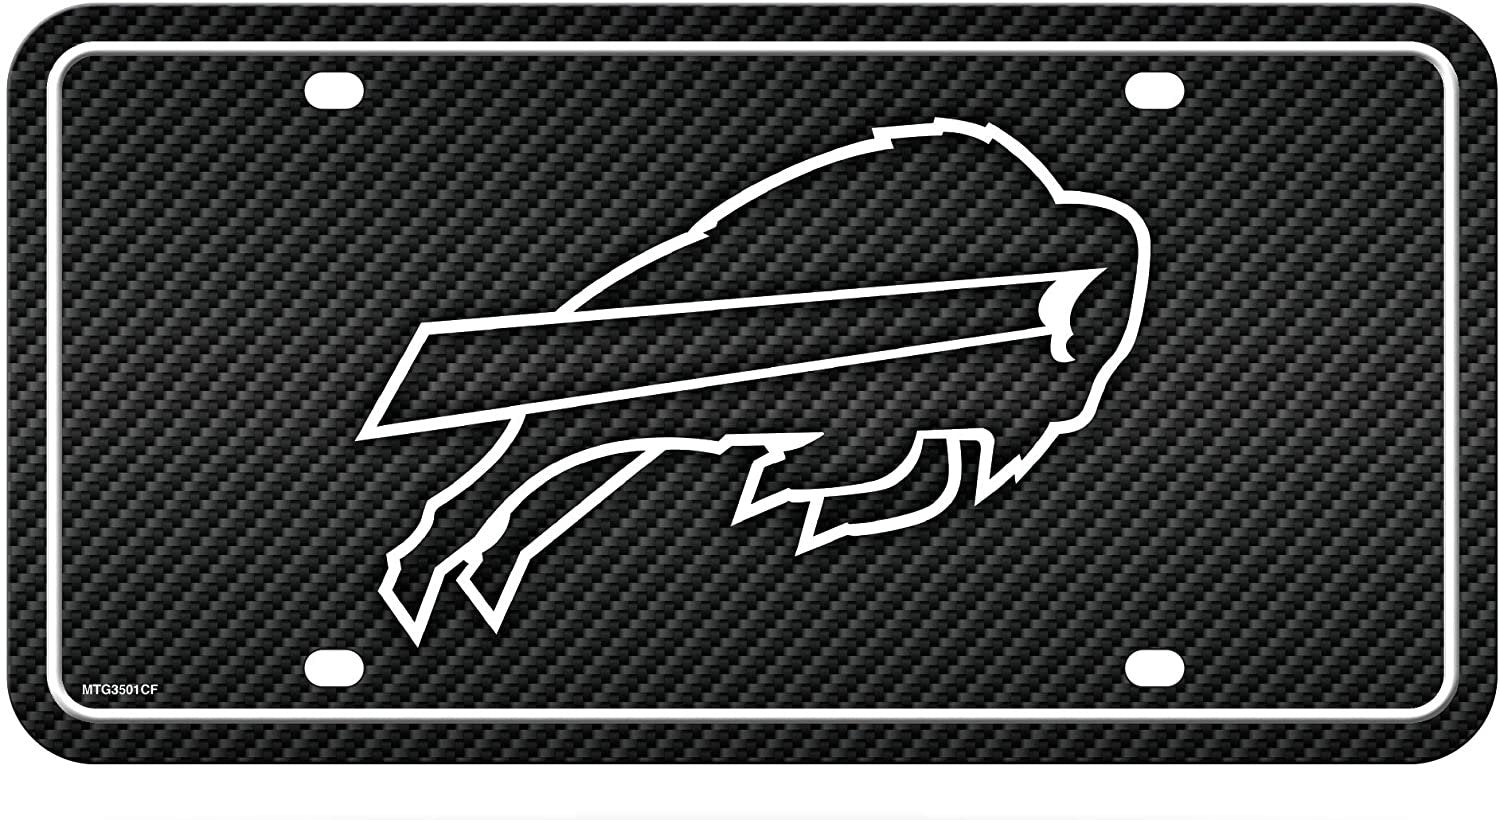 Buffalo Bills Metal Auto Tag License Plate, Carbon Fiber Design, 6x12 Inch